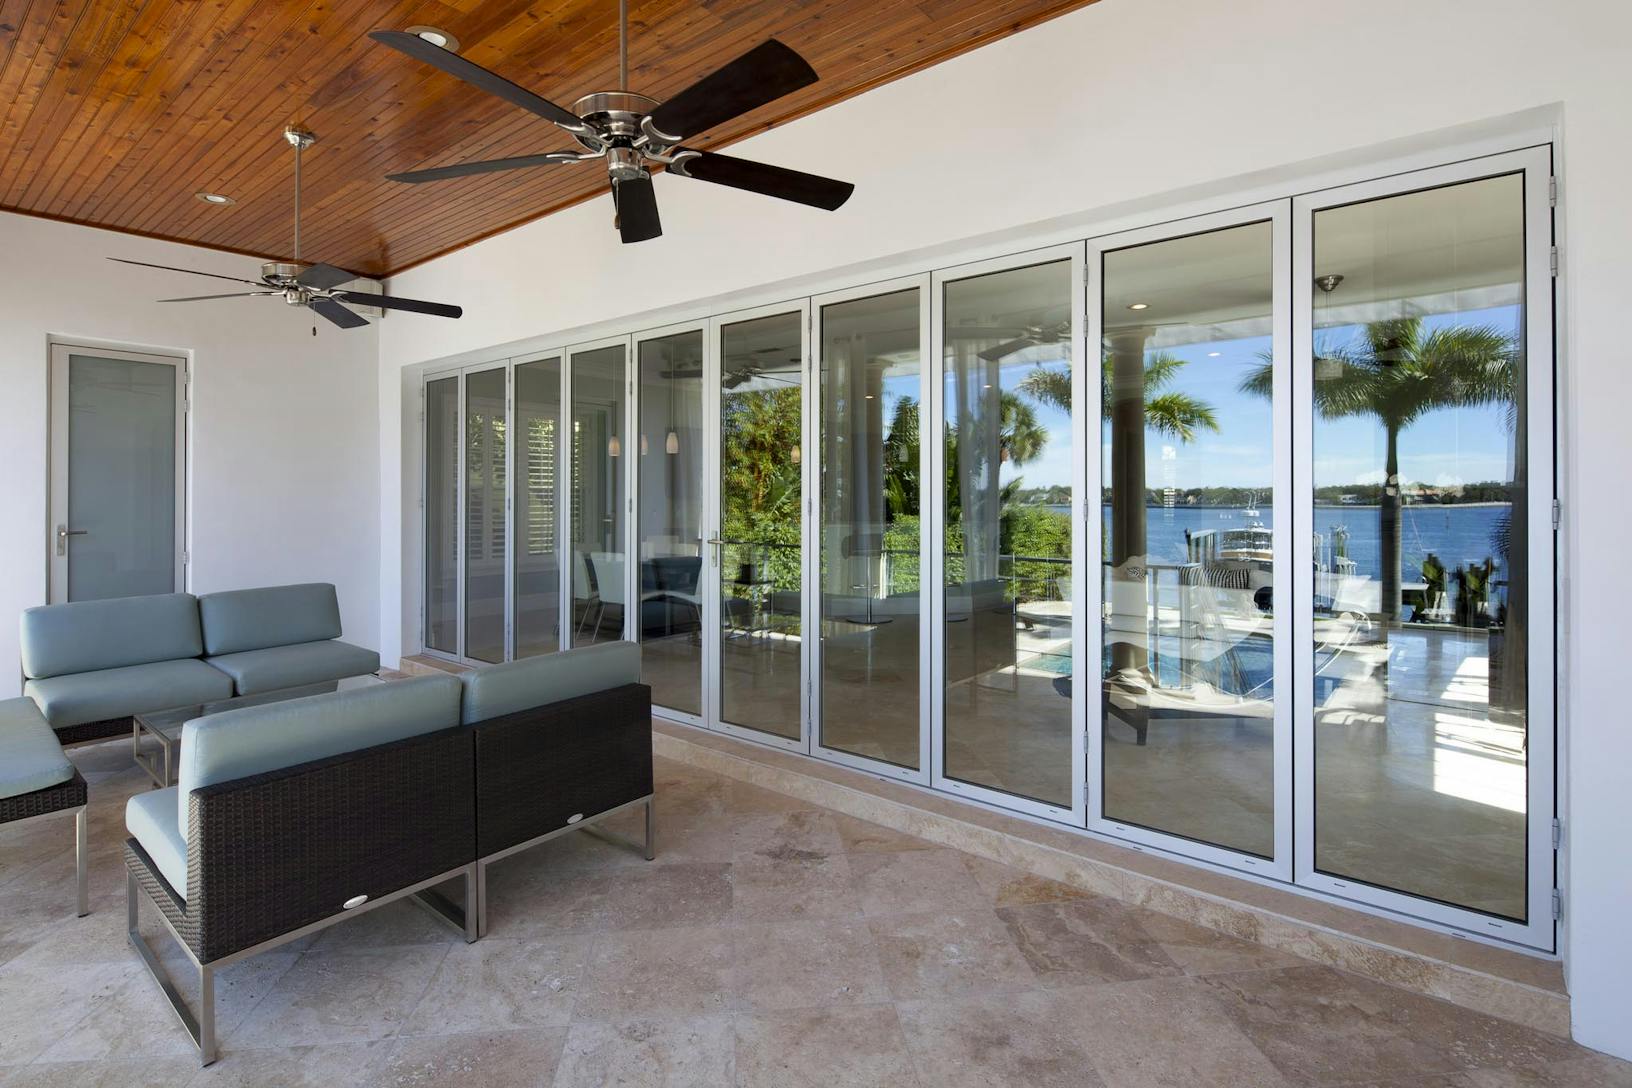 SL45 residential aluminum folding patio doors in Tampa, FL